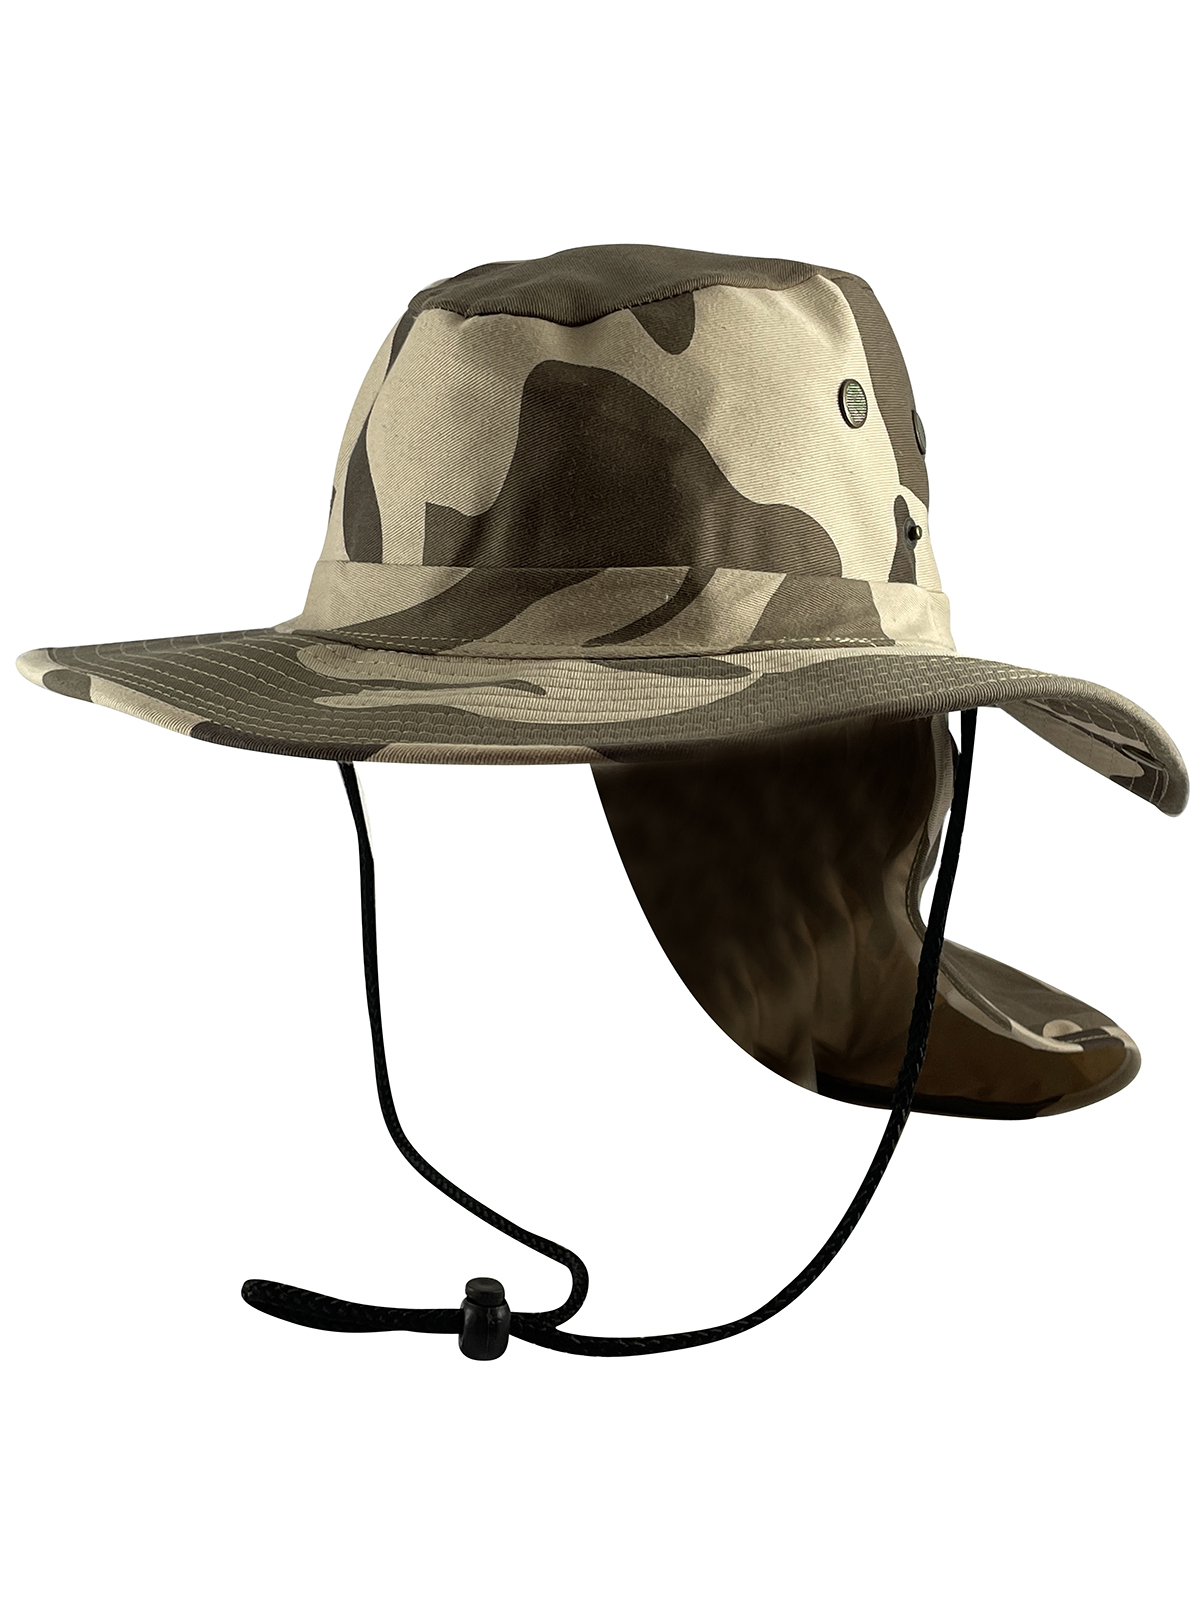 Top Headwear Safari Explorer Bucket Hat Flap Neck Cover - Desert Camo - S - image 1 of 3